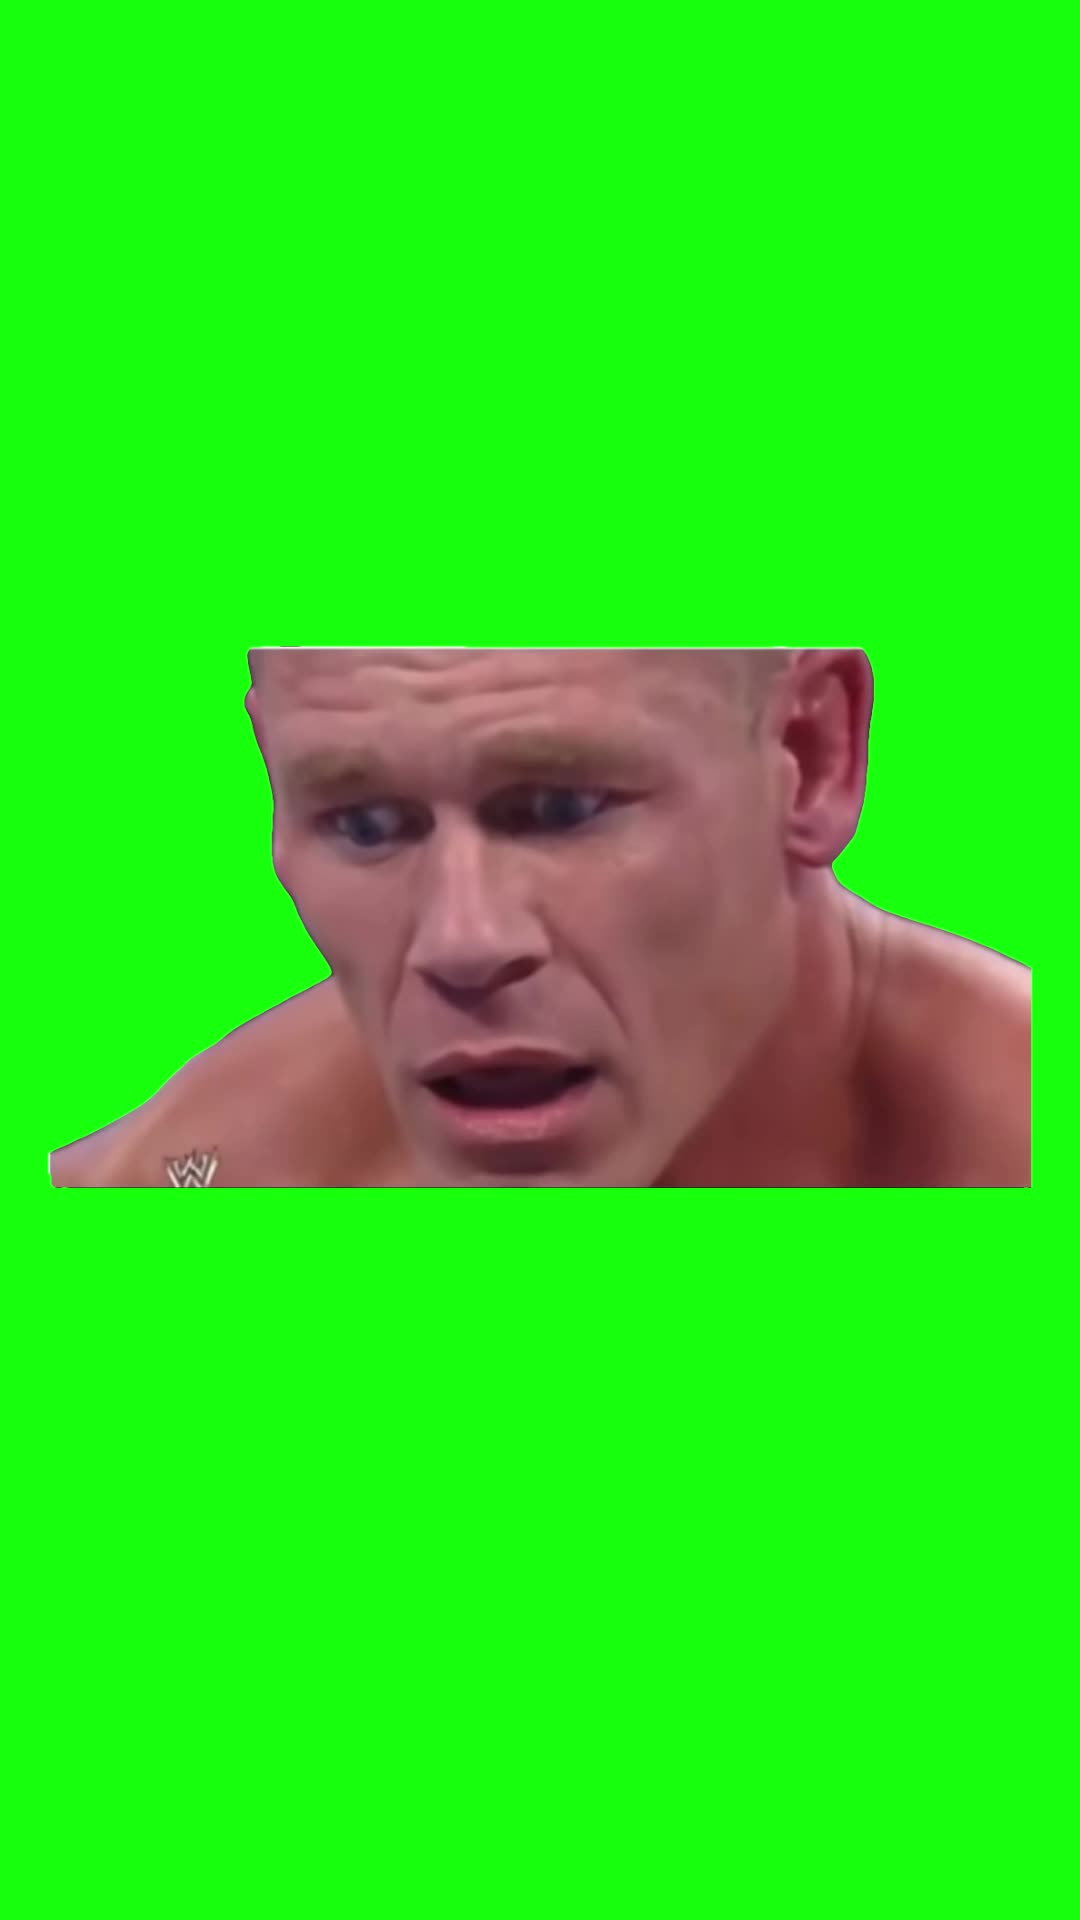 Shocked John Cena | Green Screen